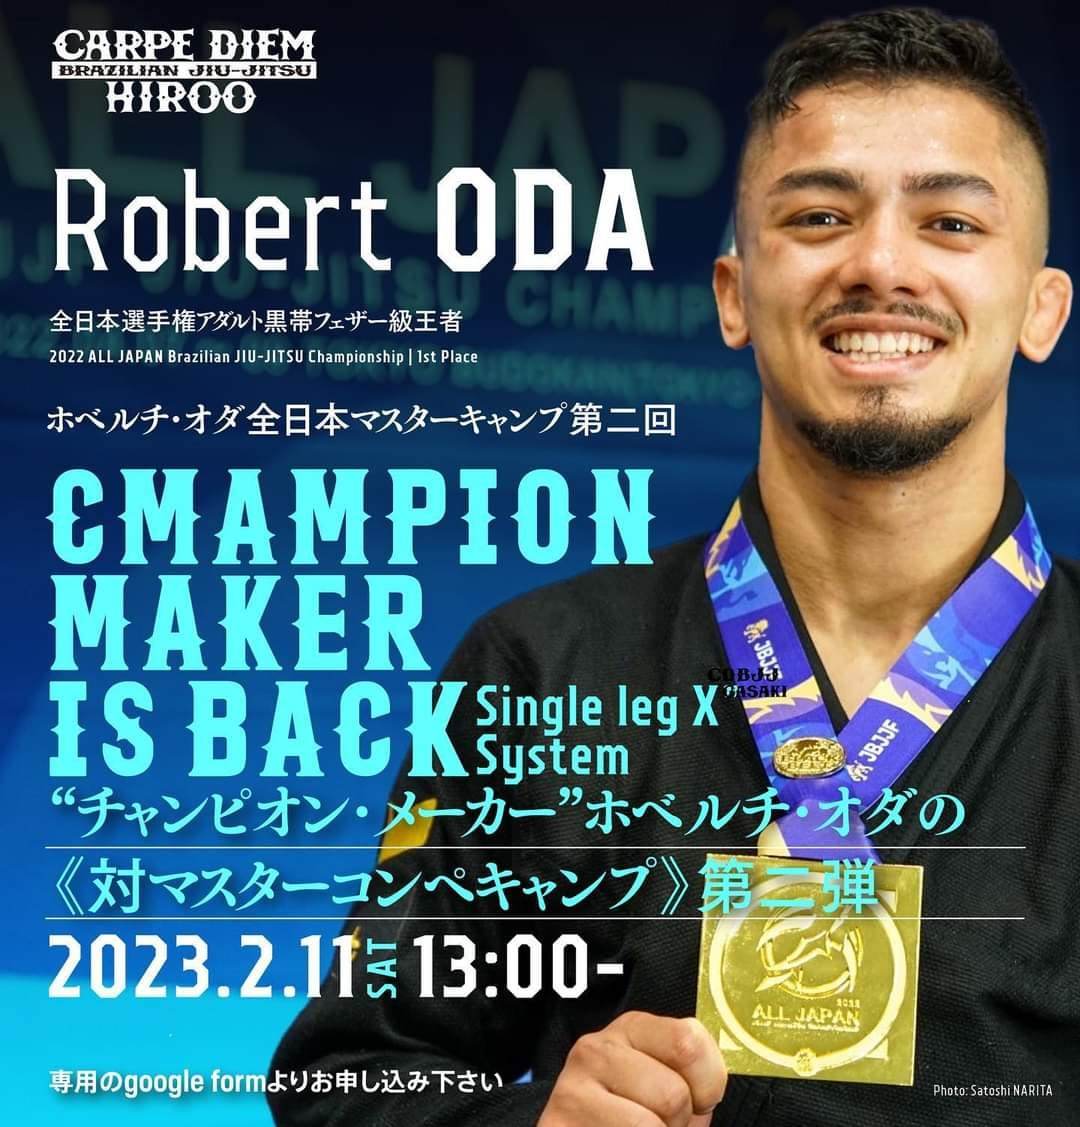 Champion Maker Roberto Oda